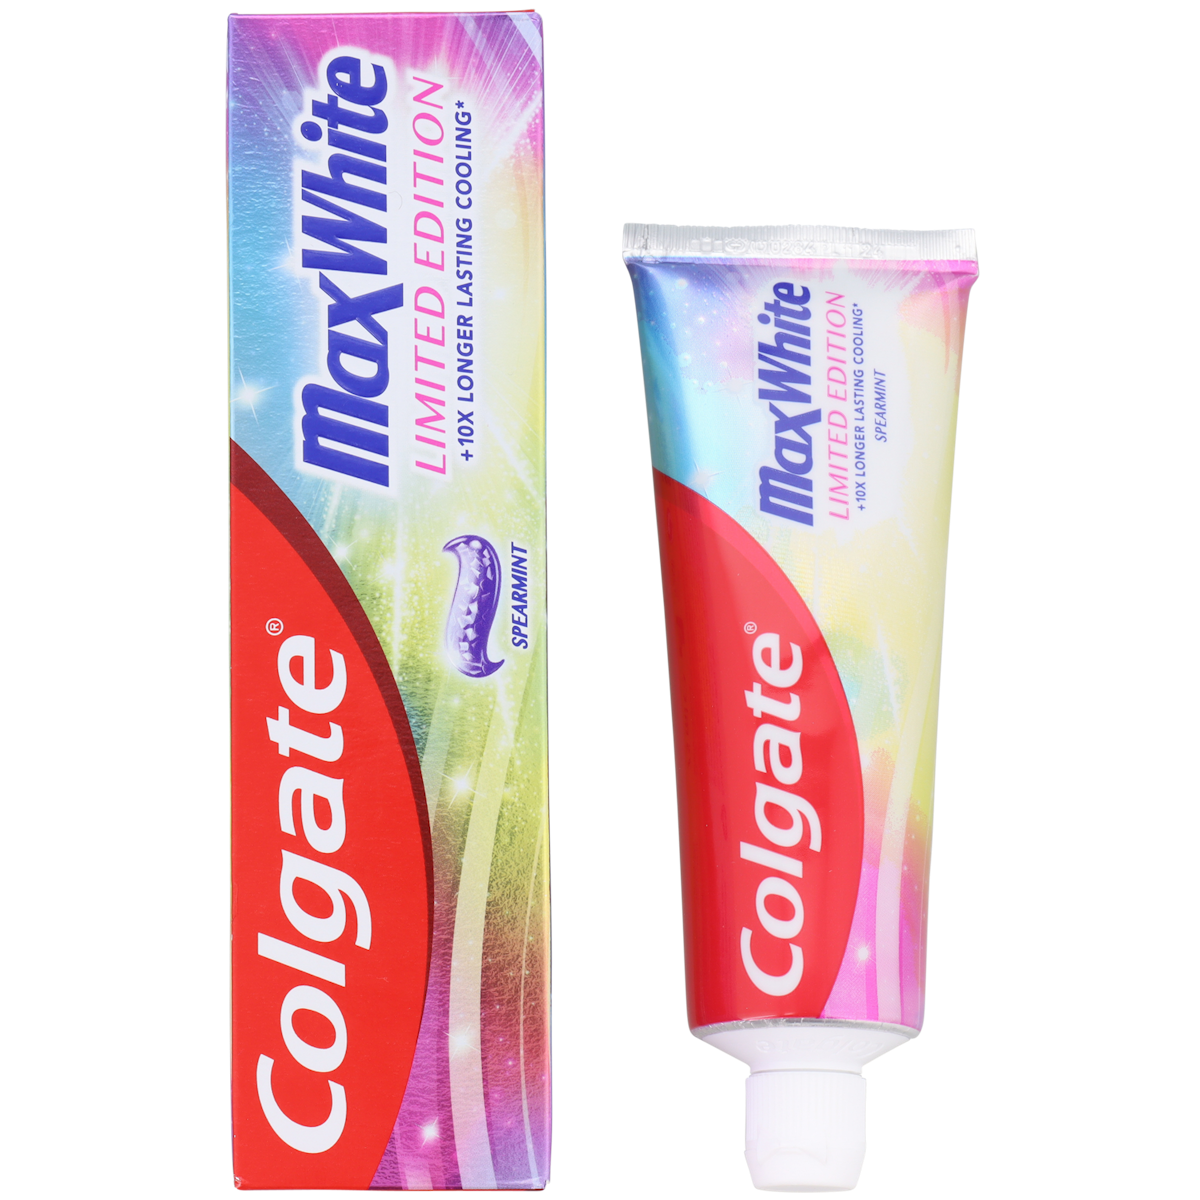 Pasta de dientes Colgate MaxWhite Limited Edition